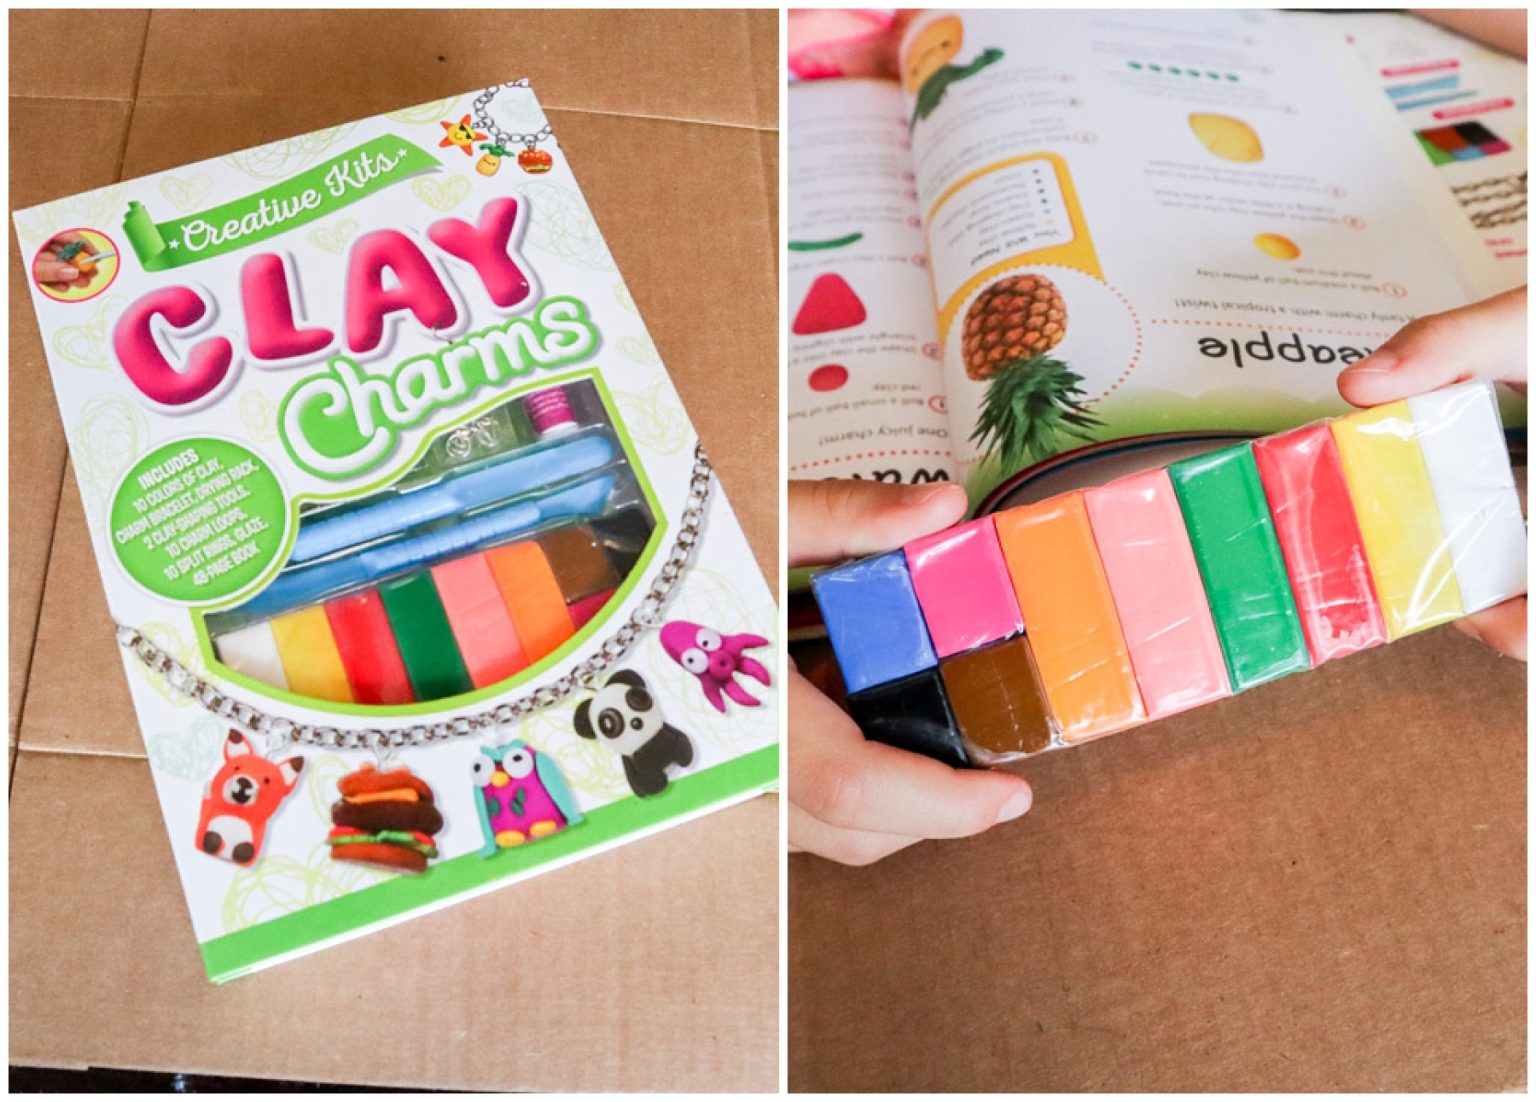 Creative Kits: Clay Charms Hardcover